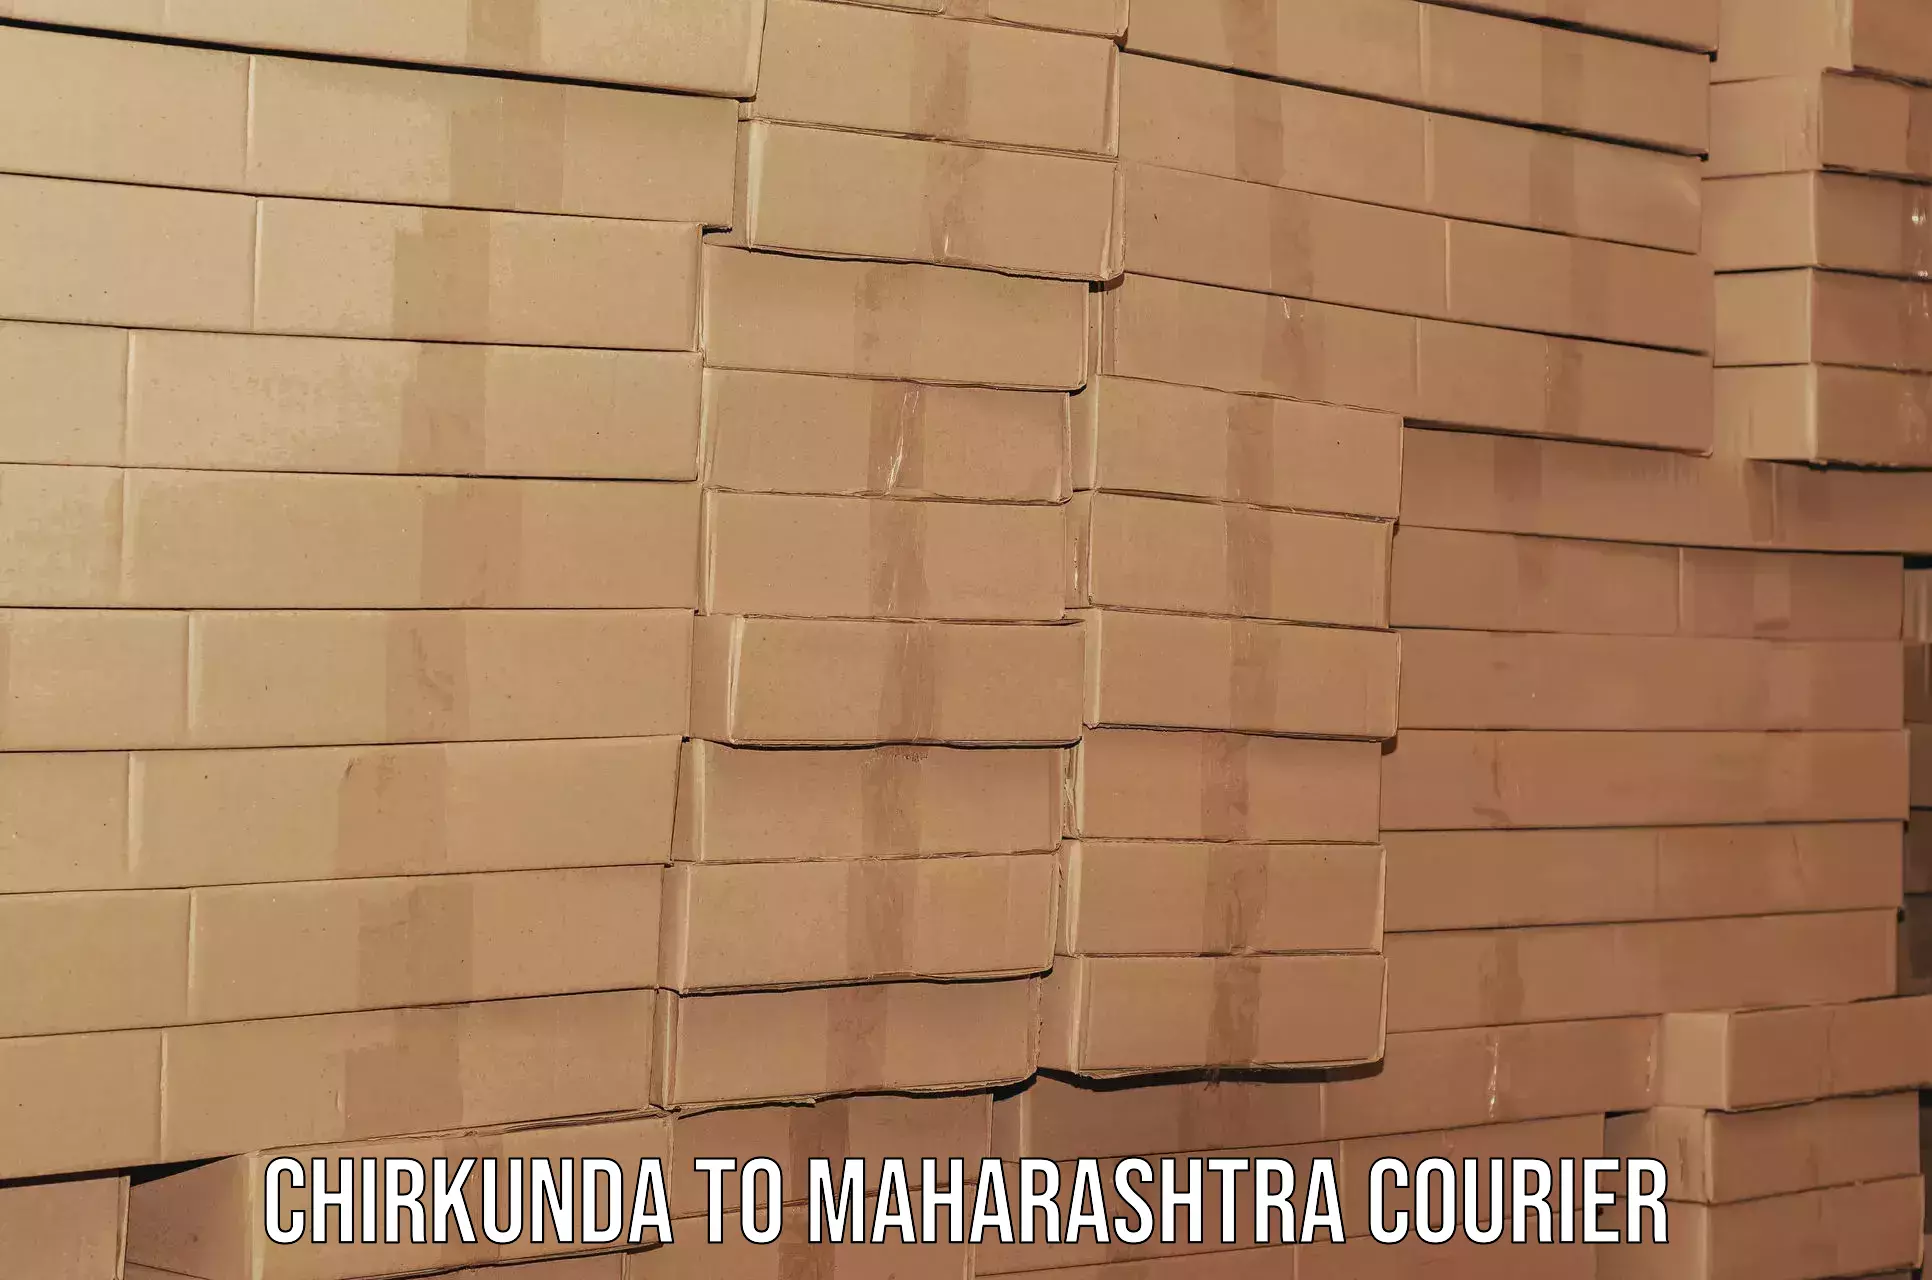 Trusted household movers in Chirkunda to Maharashtra